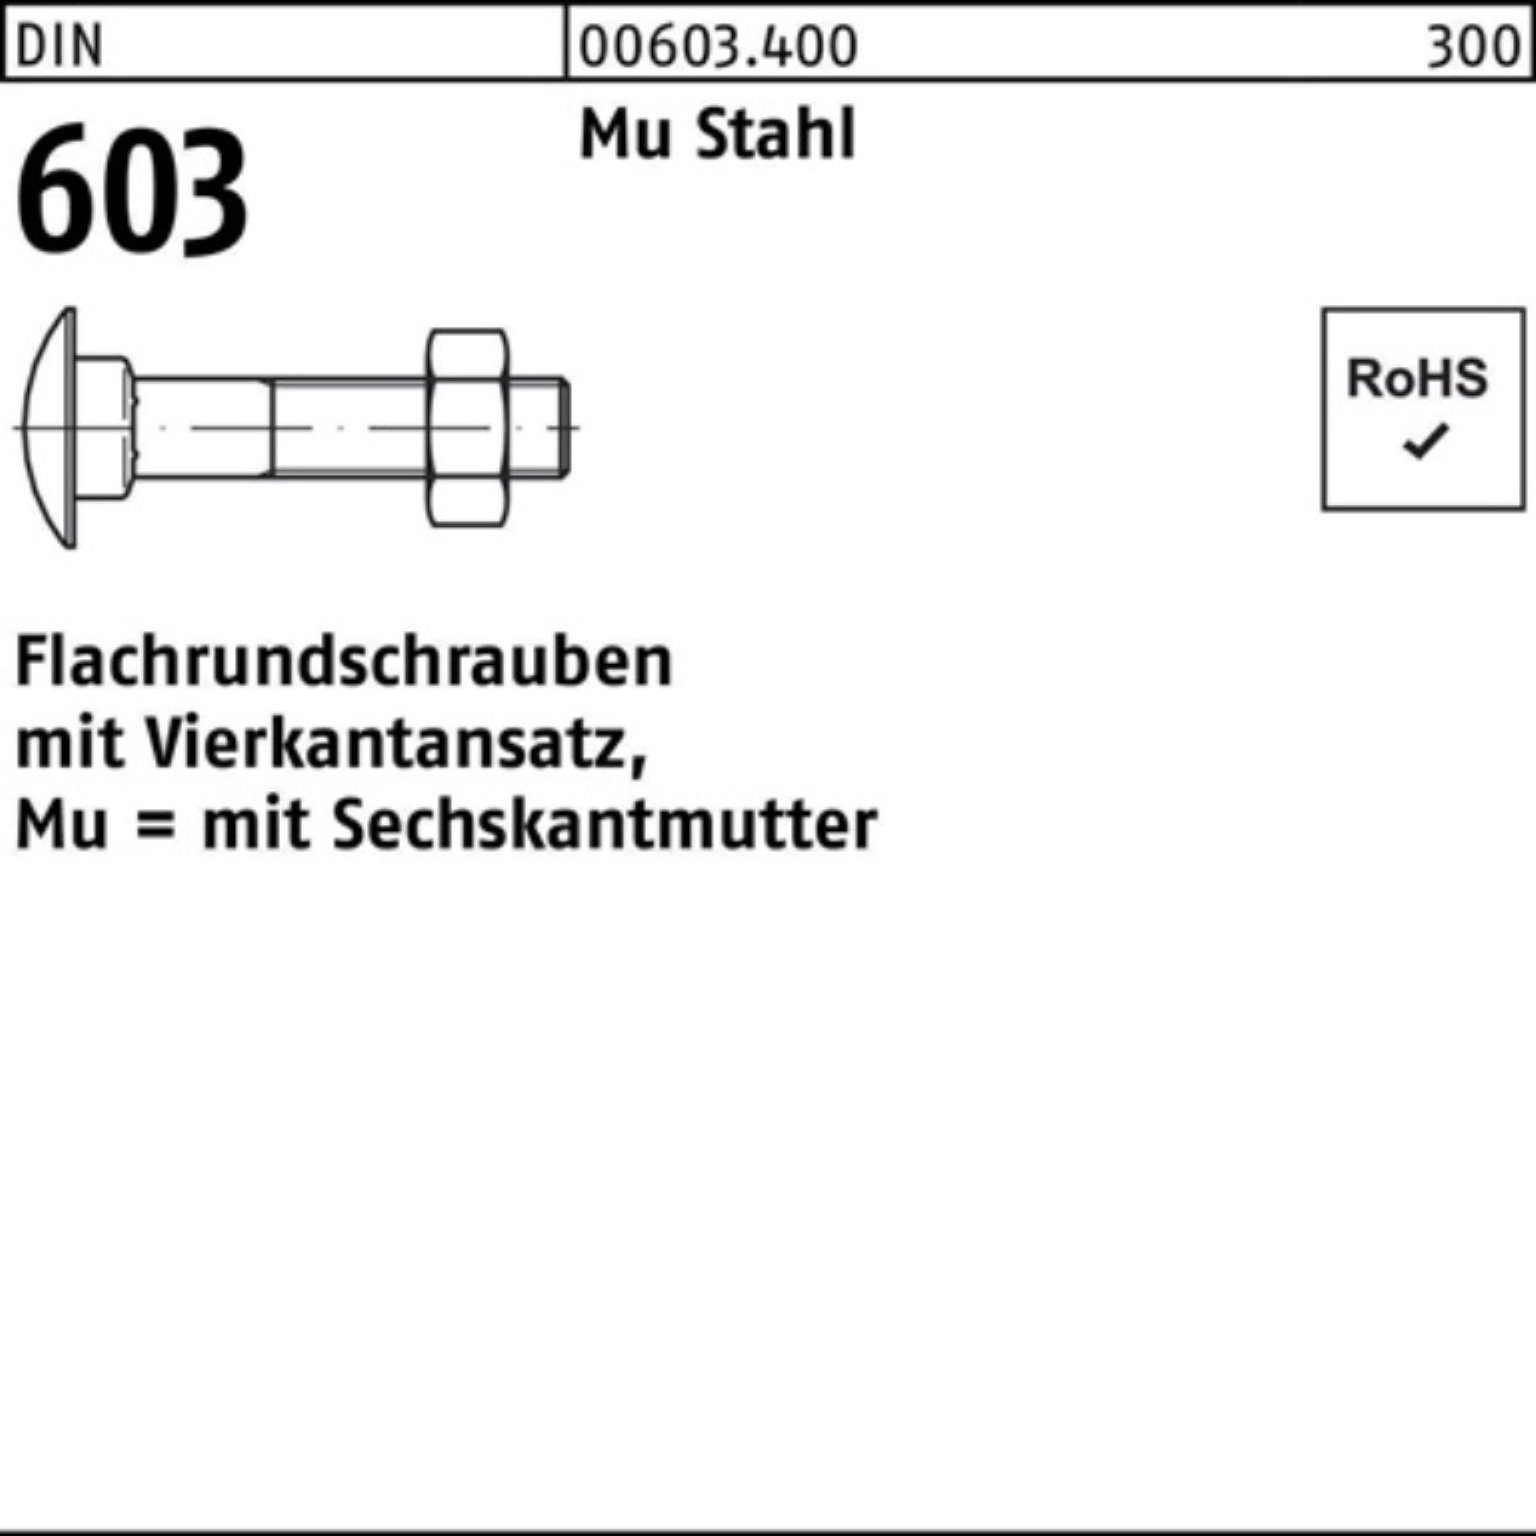 M6x80 Reyher DIN Schraube Flachrundschraube 603 200er Pack M Vierkantansatz/6-ktmutter